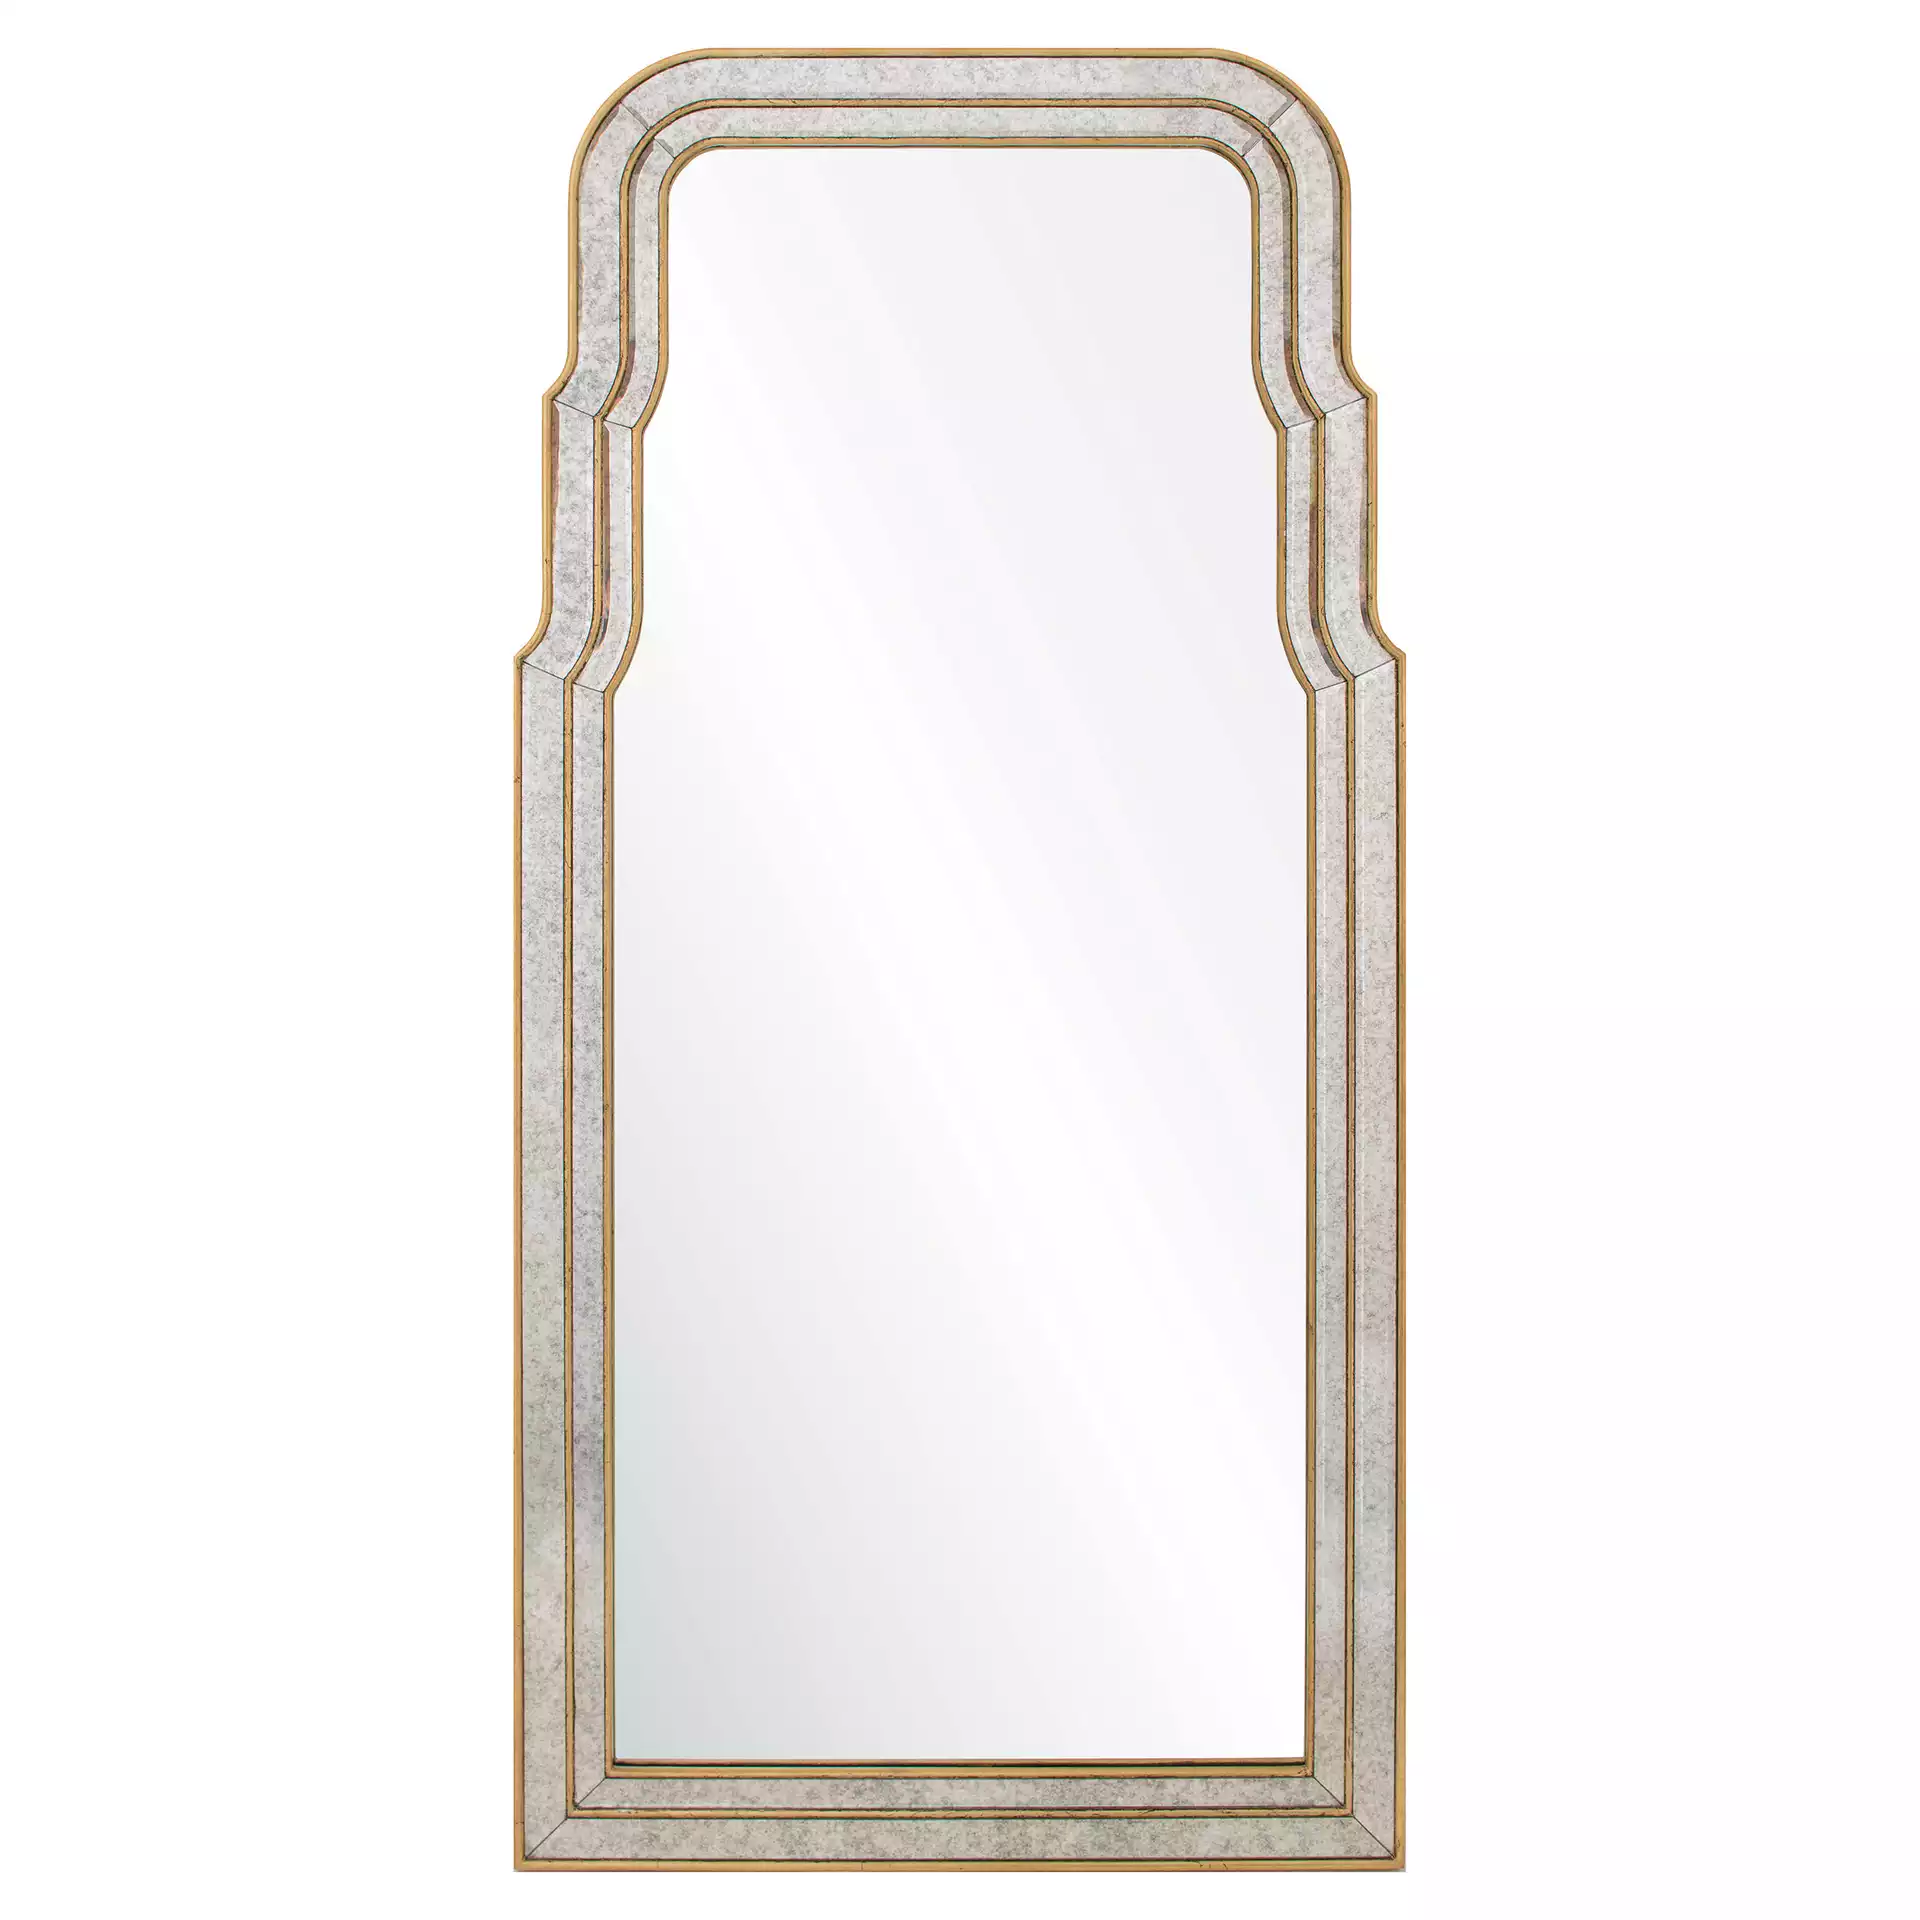 Kaye Modern Antique Mirror Framed Gold Leaf Novelty Wall Mirror